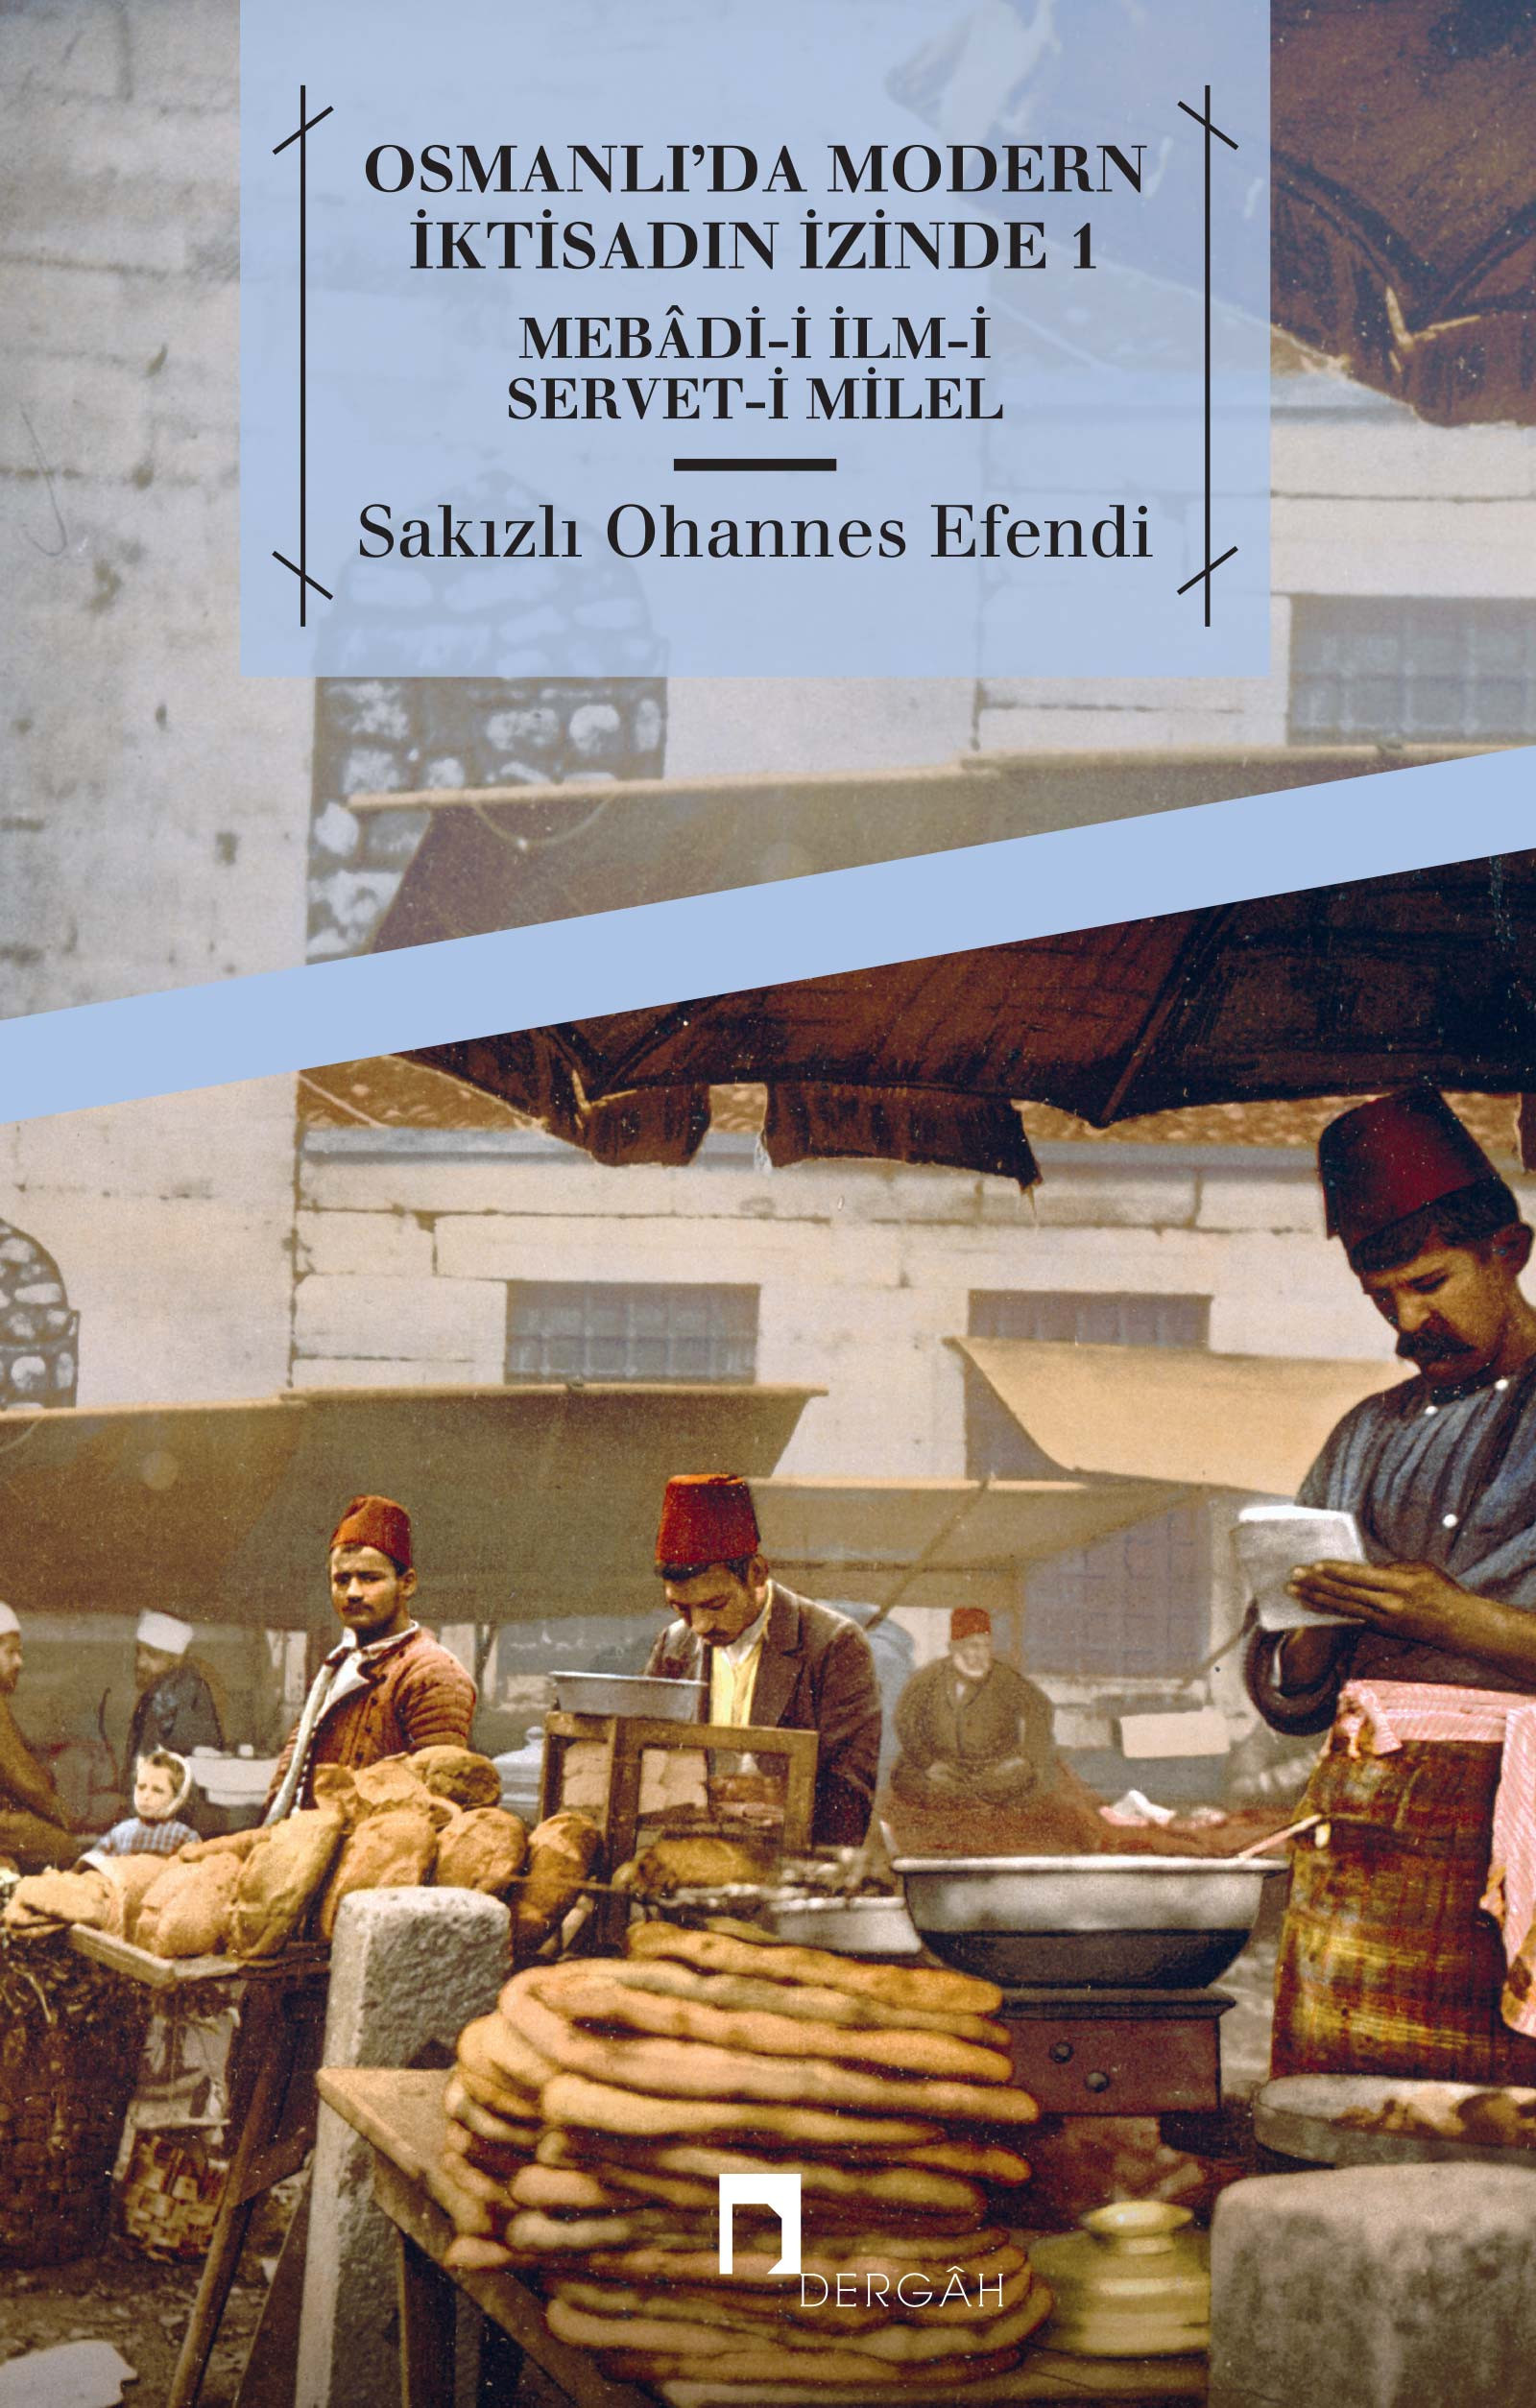 Modern Economy in Ottoman